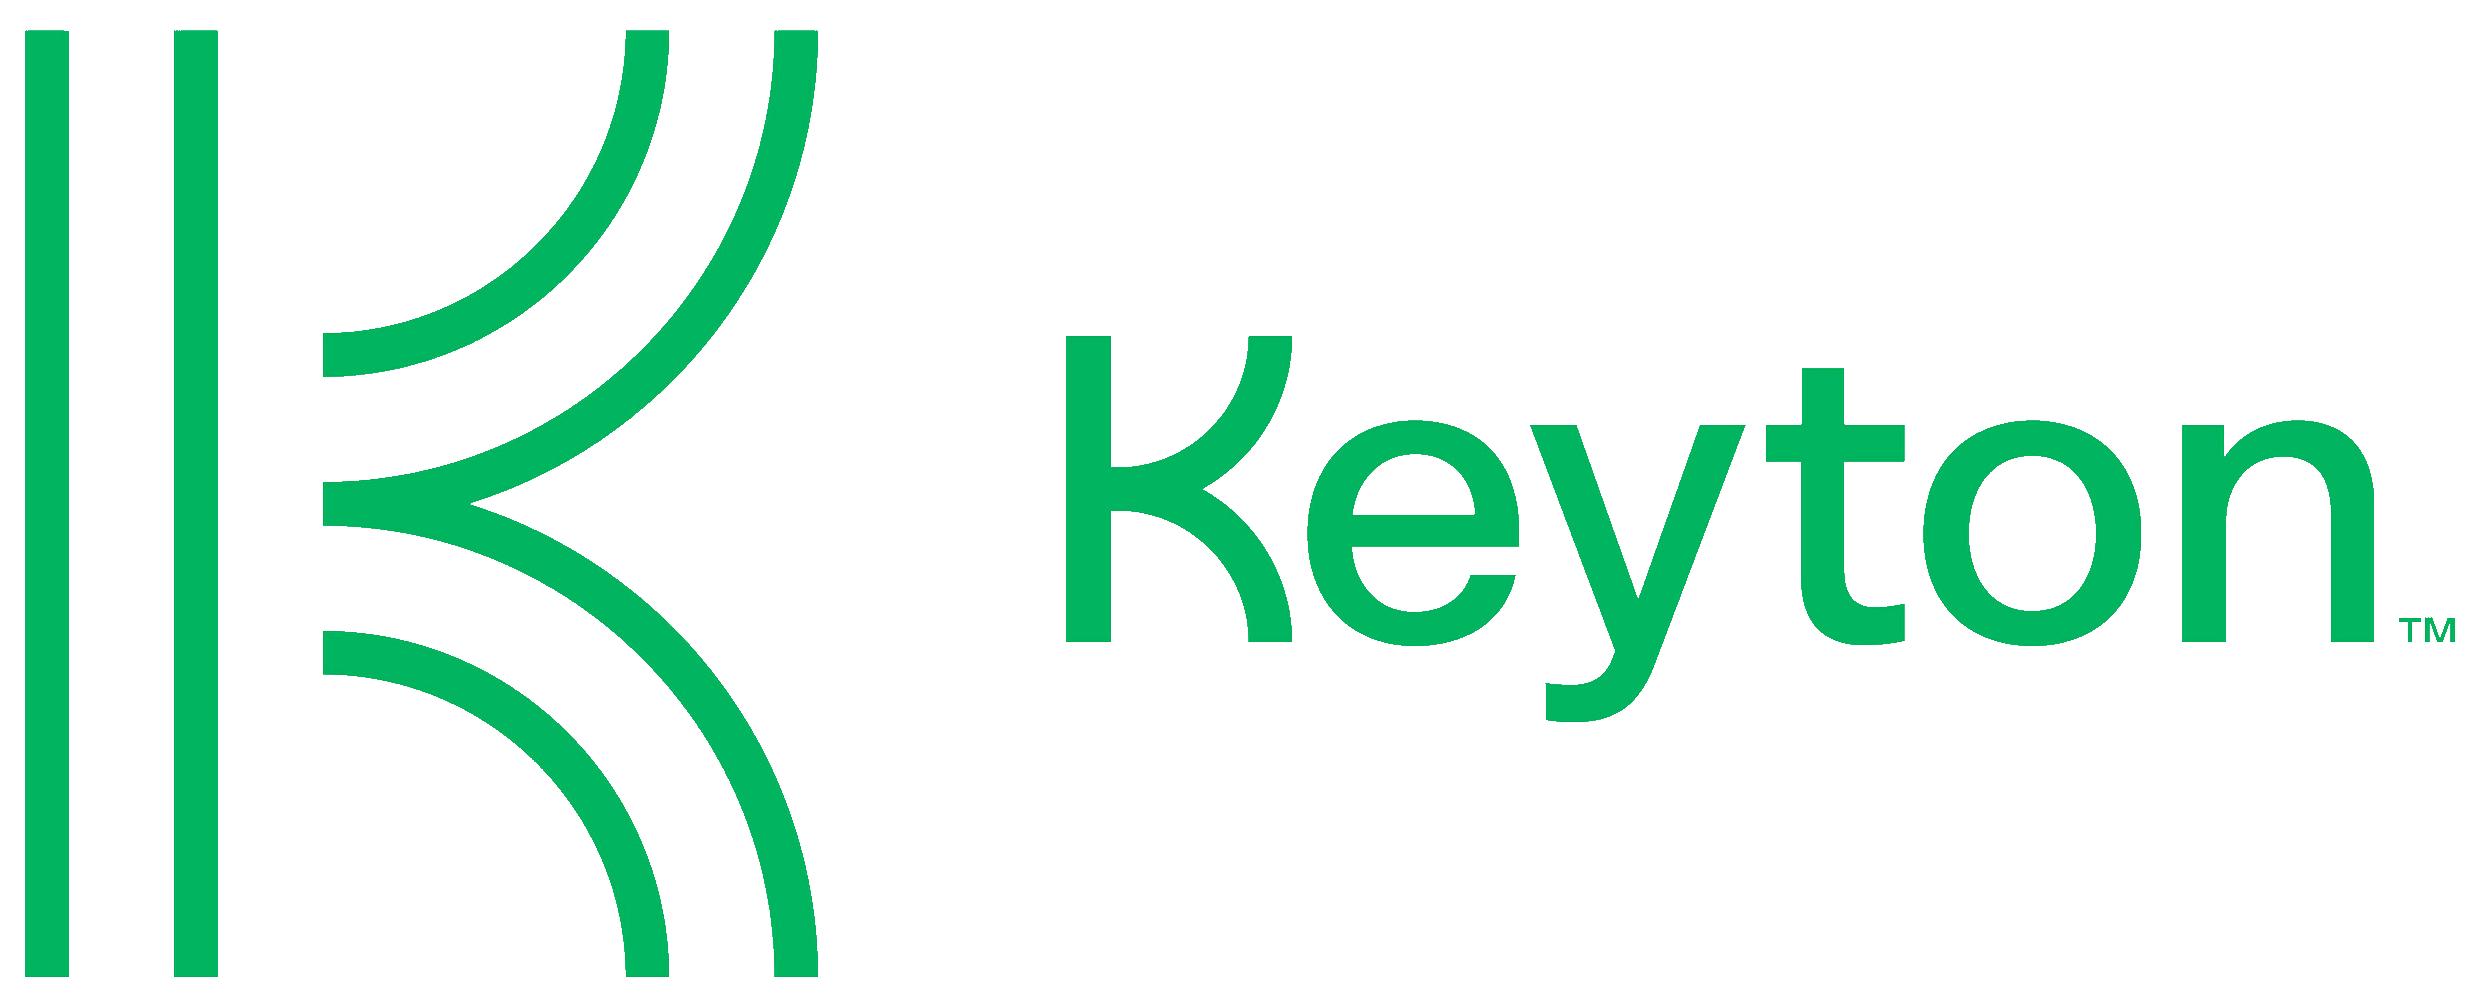 Keyton_Retirement_Living_Secondary_Green_Logo